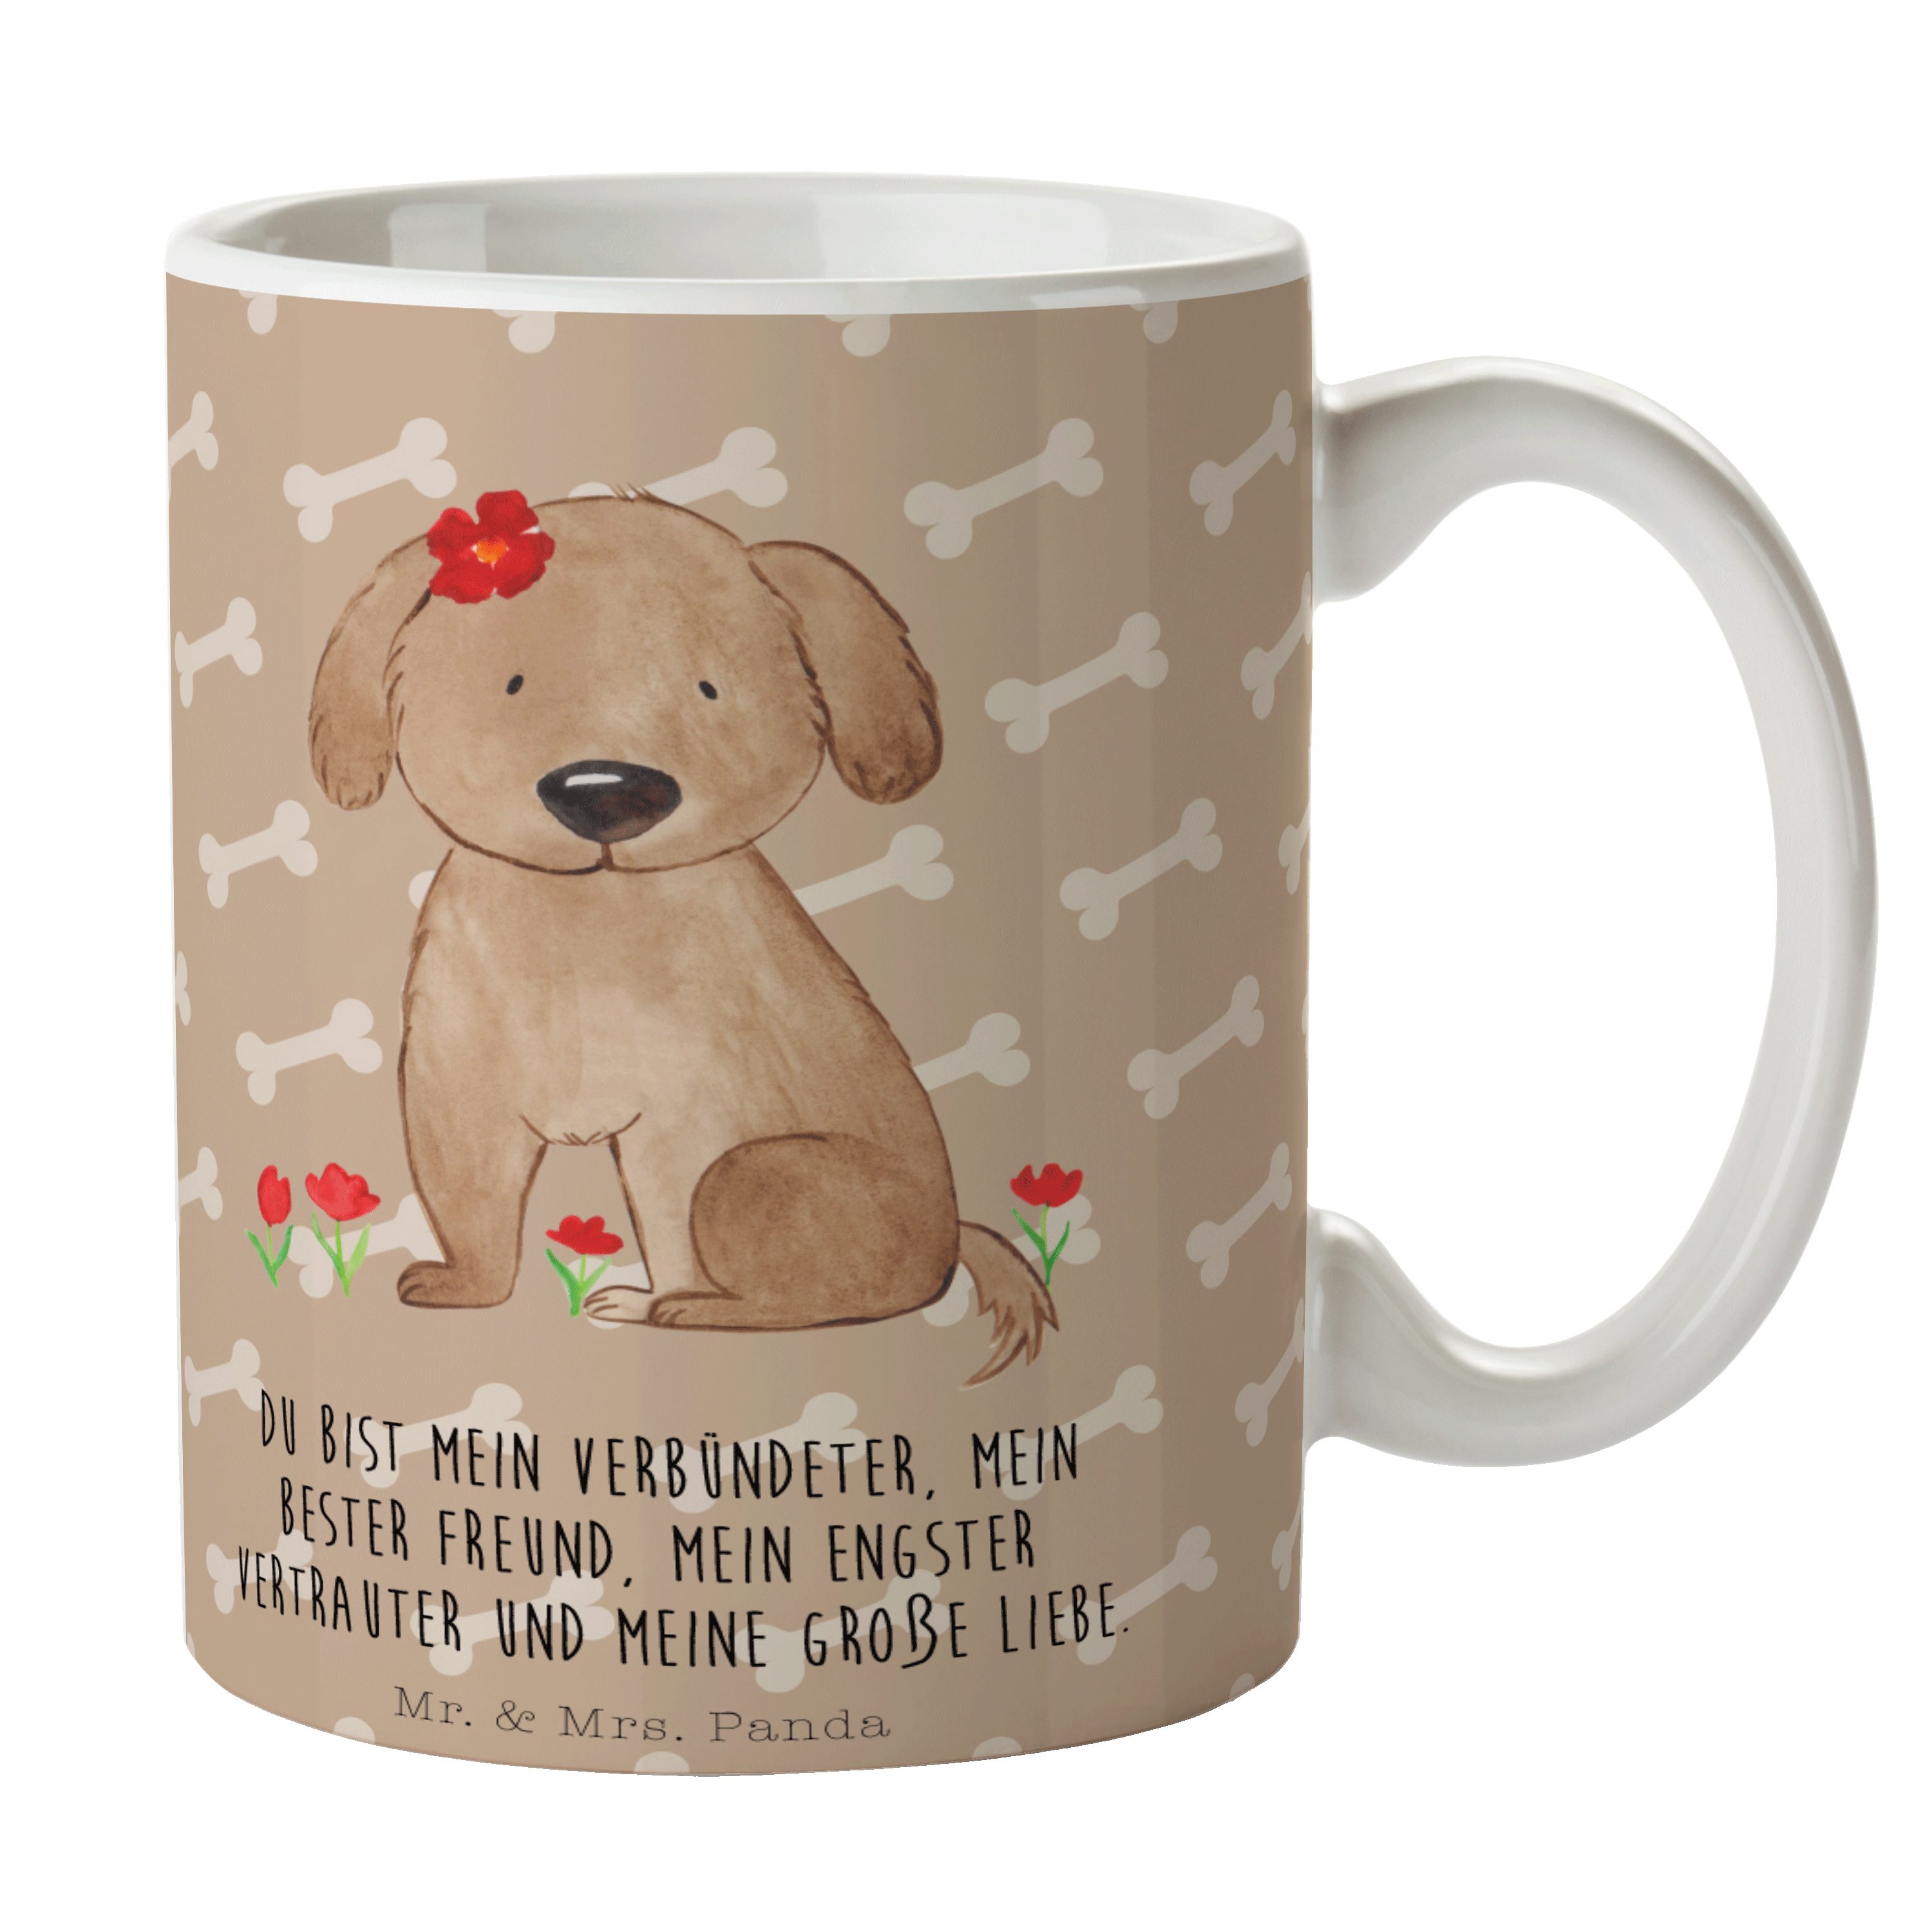 Mr. & Mrs. Panda - Hundedame - Geschenk, Teetasse, Tasse Keramik Tasse, Hau, Hund Hundeglück Sprüche